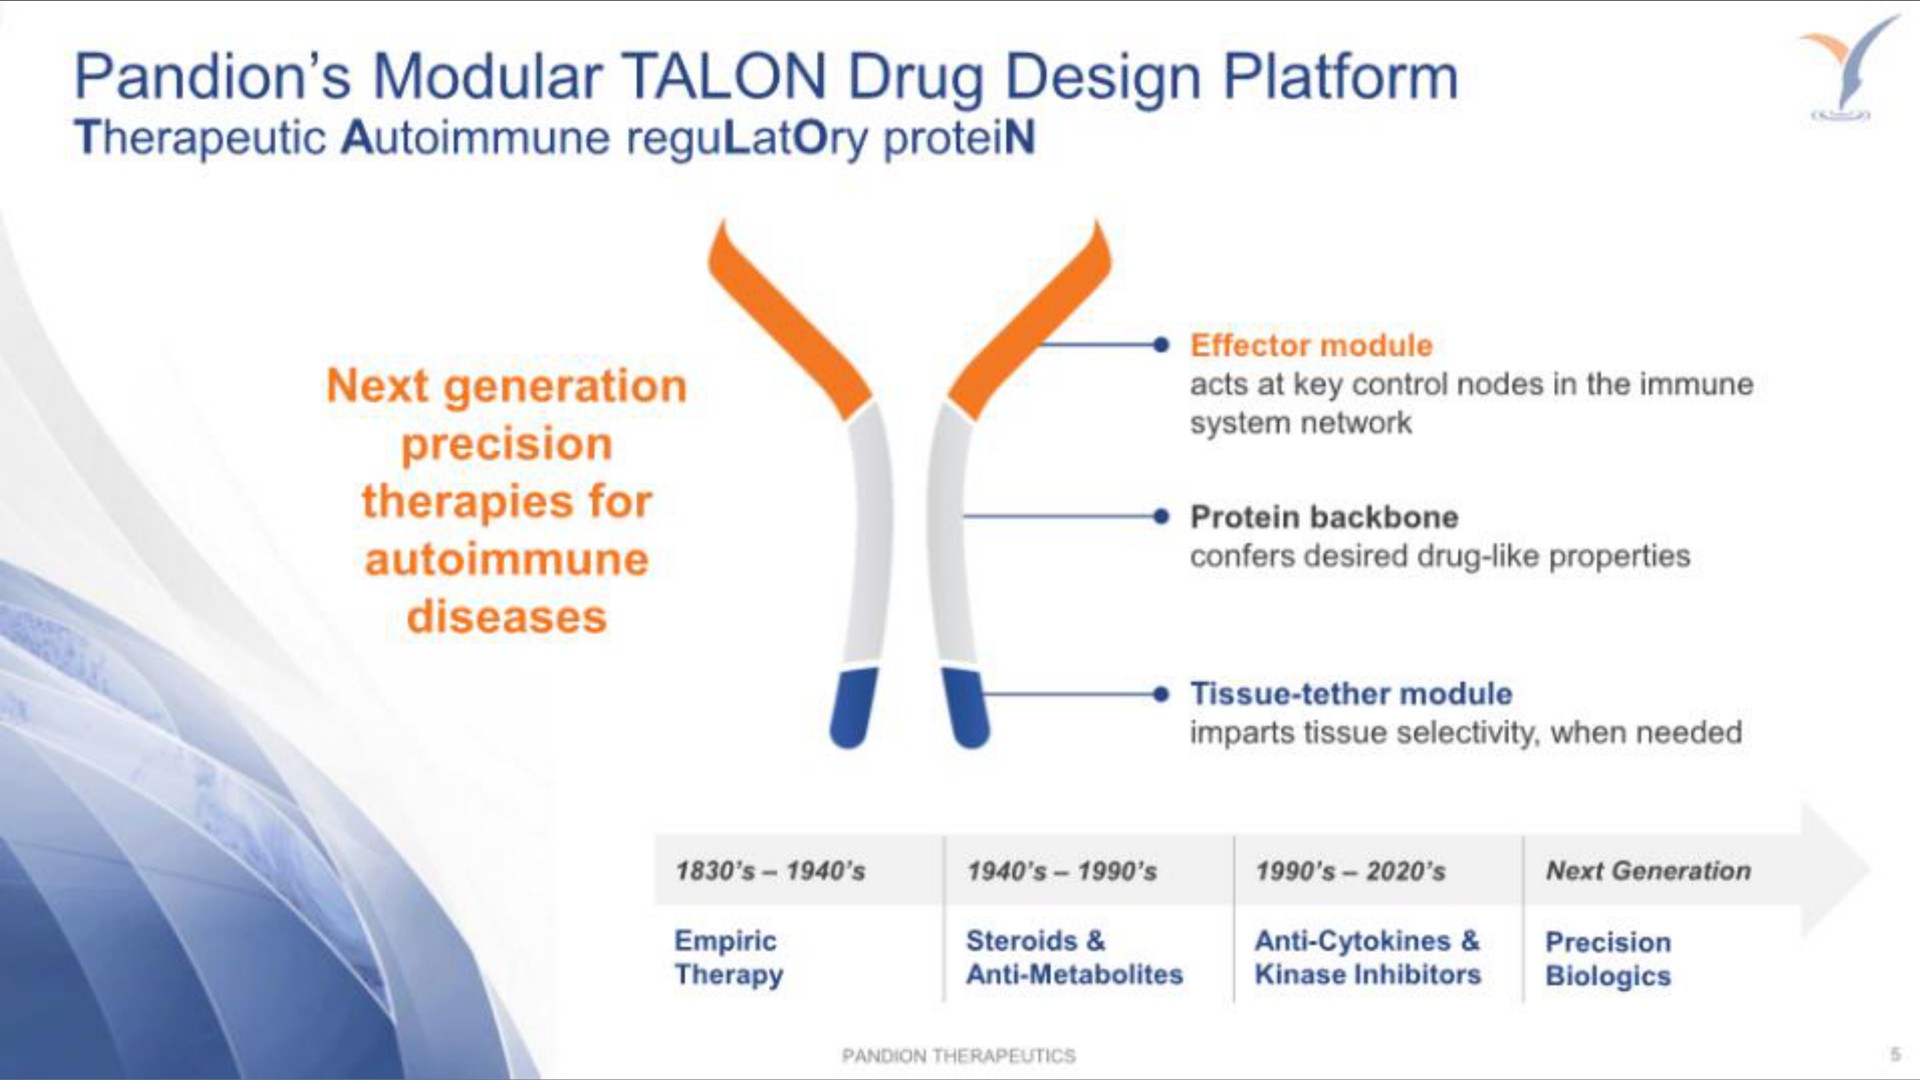 modular talon drug design platform | Pandion Therapeutics